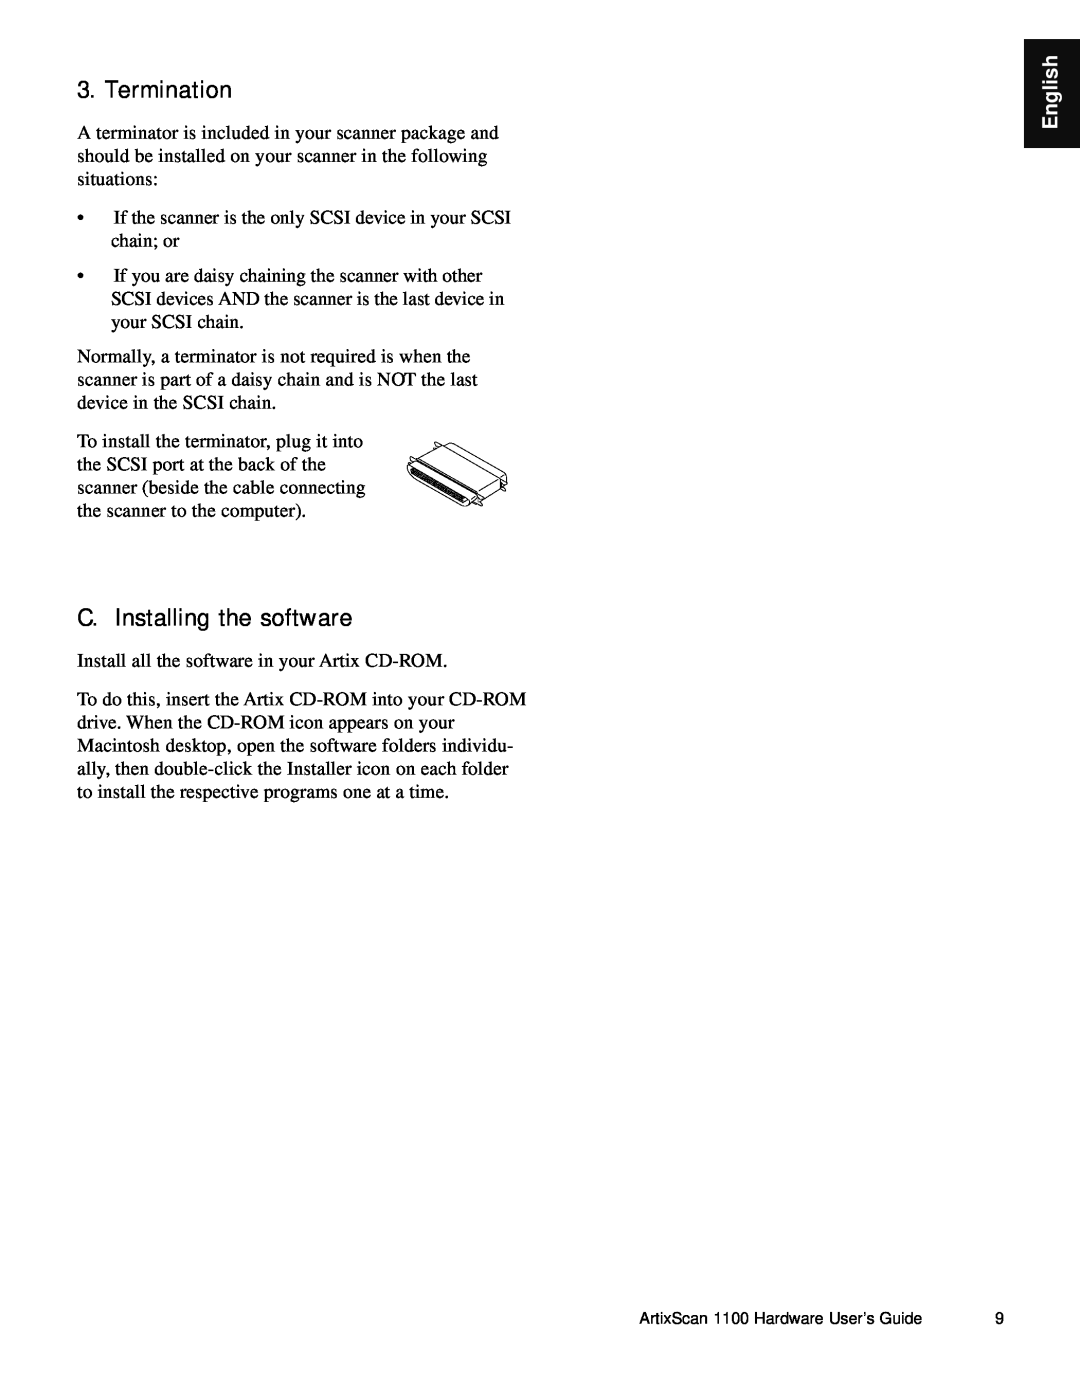 Microtek Artix Scan1100 manual Termination, C. Installing the software, English 